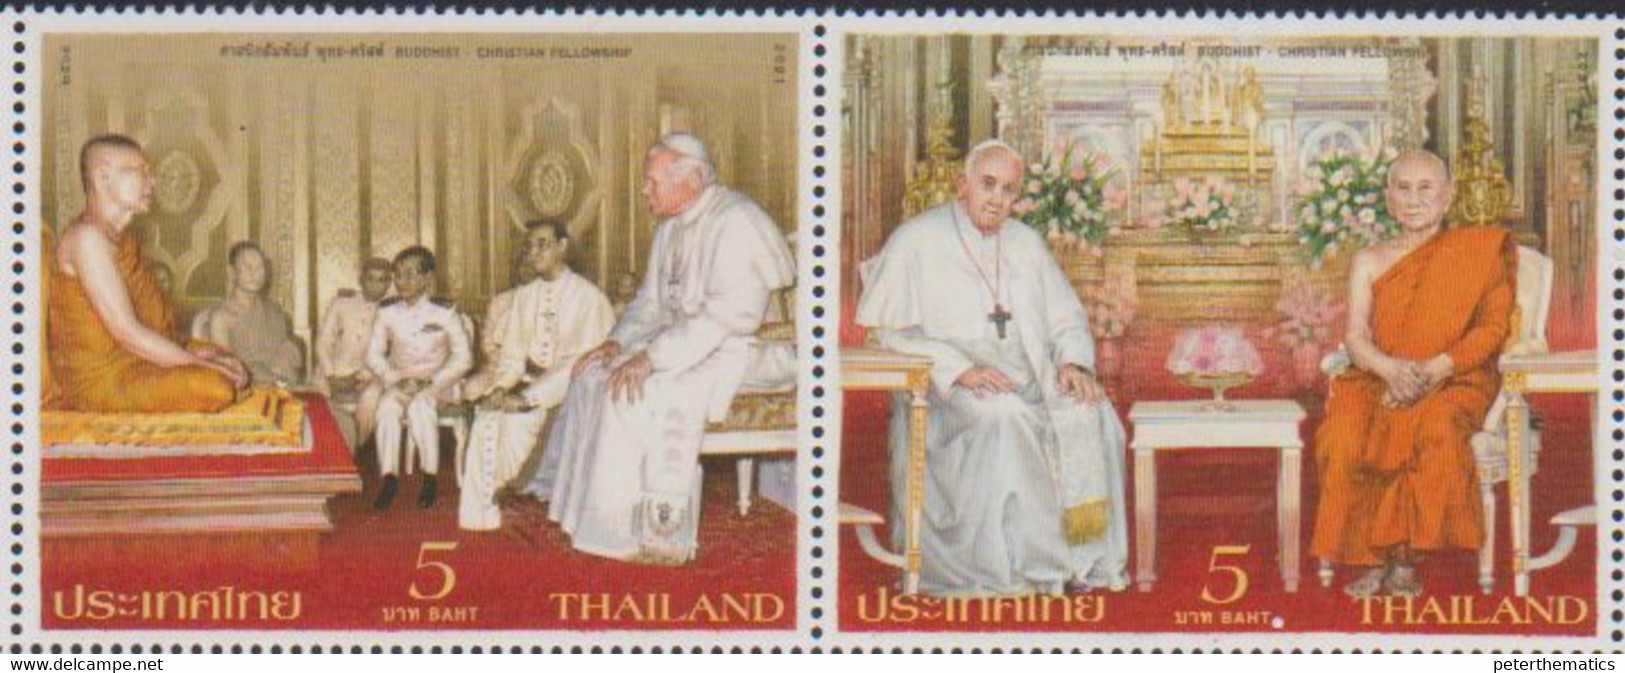 THAILAND, 2021, MNH, RELIGION, BUDDHISM, CHRISTIANITY, BUDDHIST-CHRISTIAN FELLOWSHIP, POPES, 2v - Bouddhisme